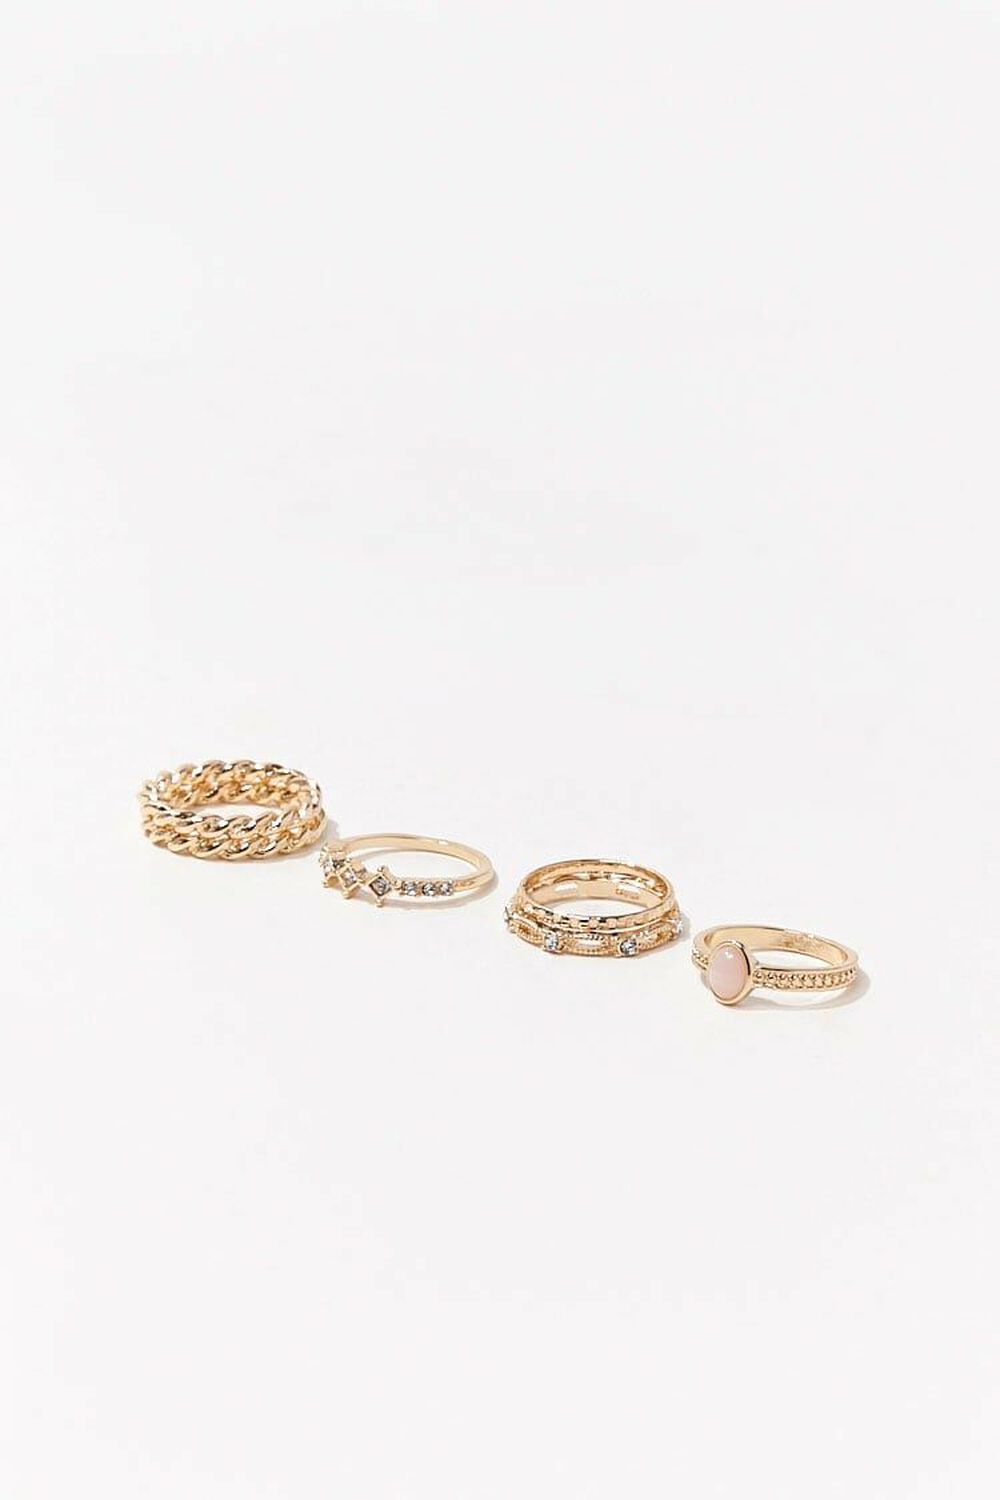 GOLD Etched Ring Set, image 1